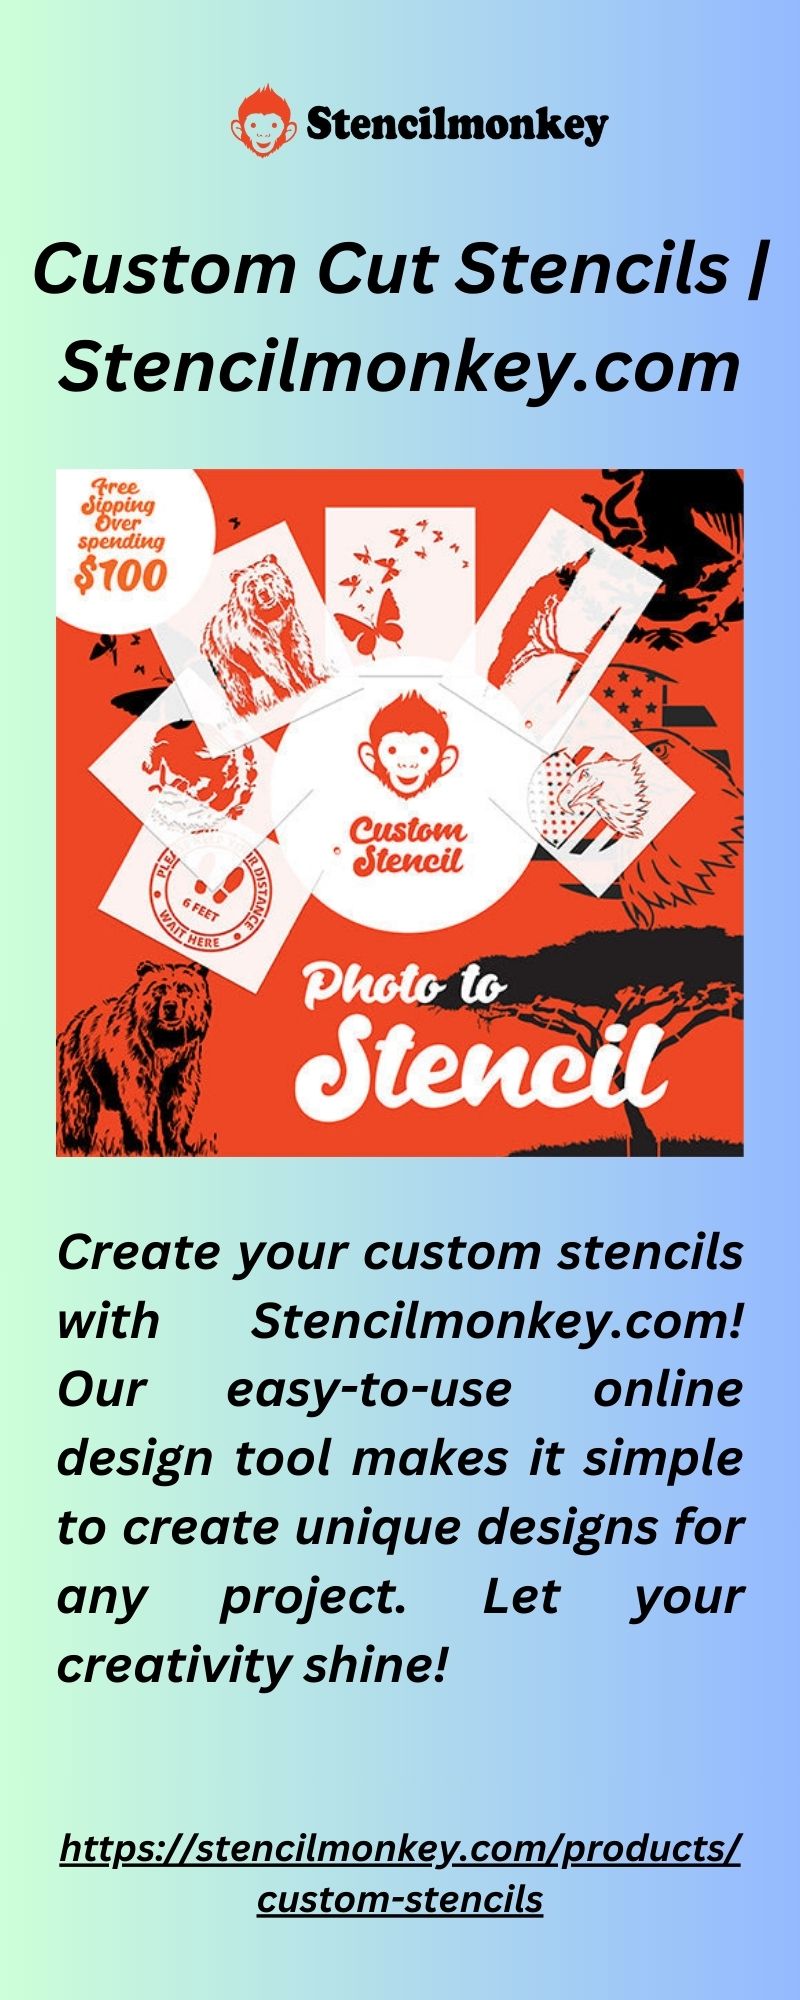 Custom Cut Stencils Stencilmonkey.com by stencilmonkey0 on DeviantArt